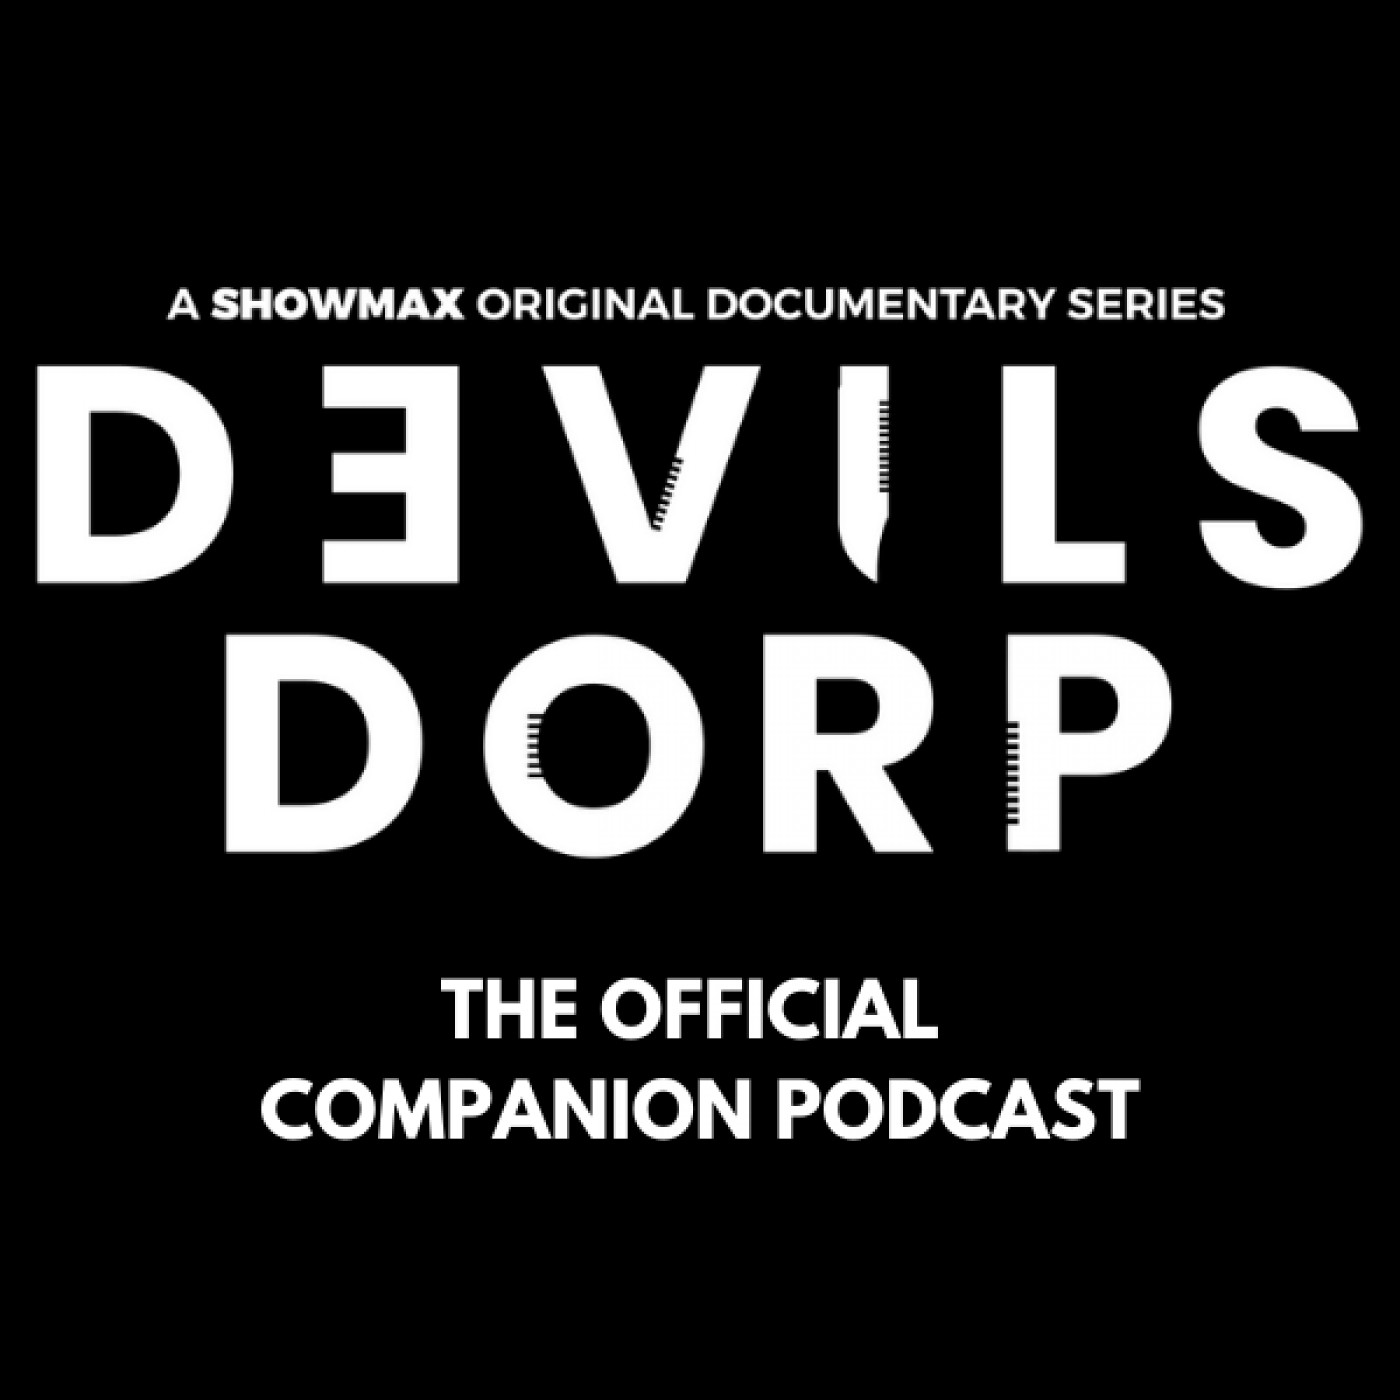 New Podcast Trailer - Devilsdorp The Official Companion Podcast